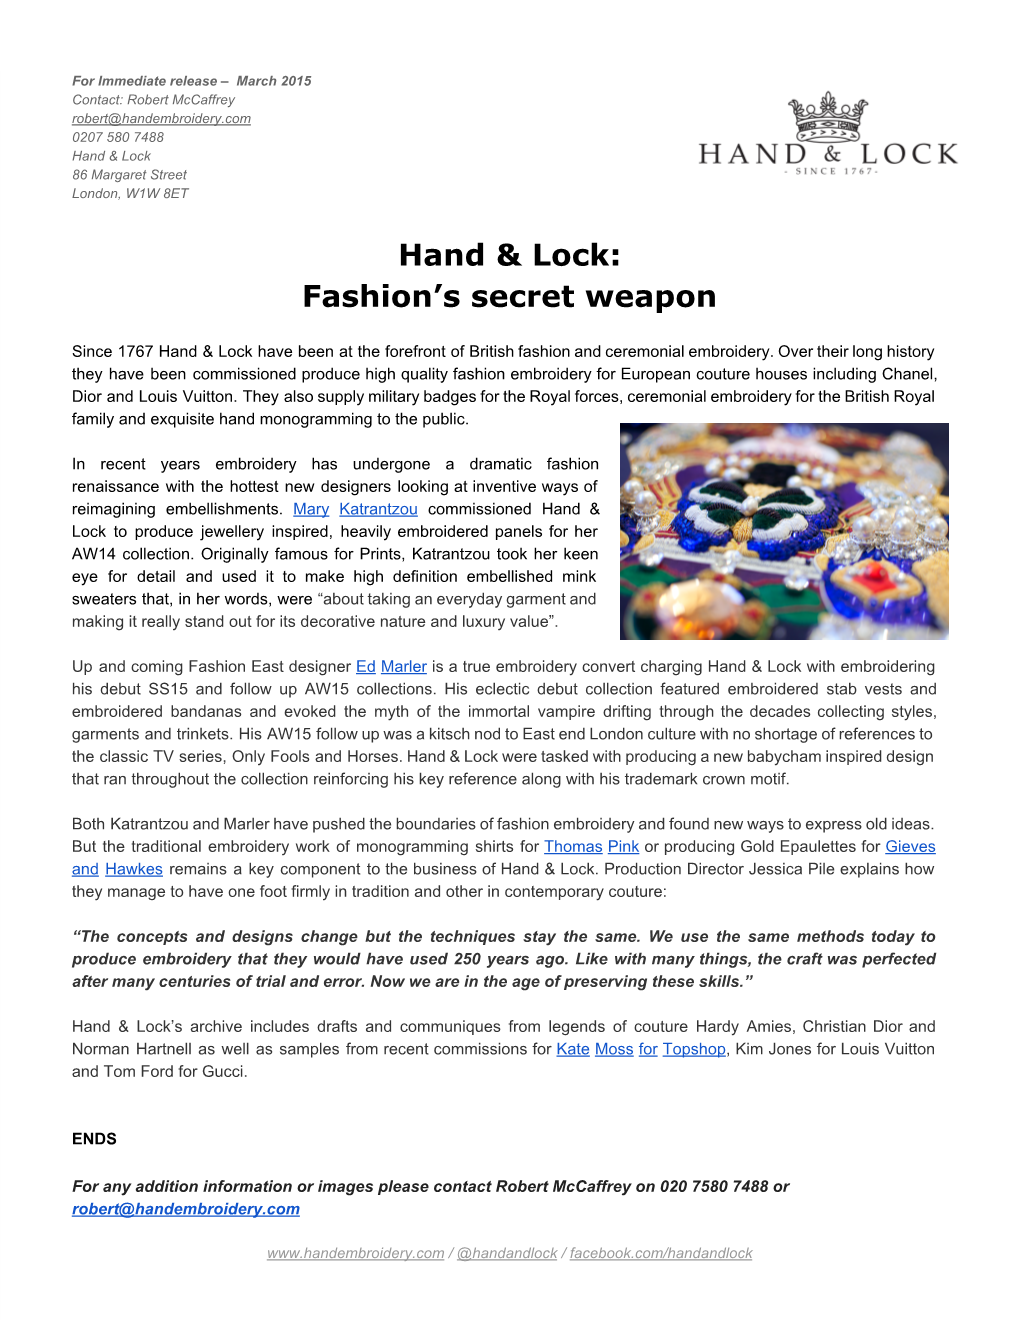 PRESS RELEASE: Hand & Lock, Fashion's Secret Weapon